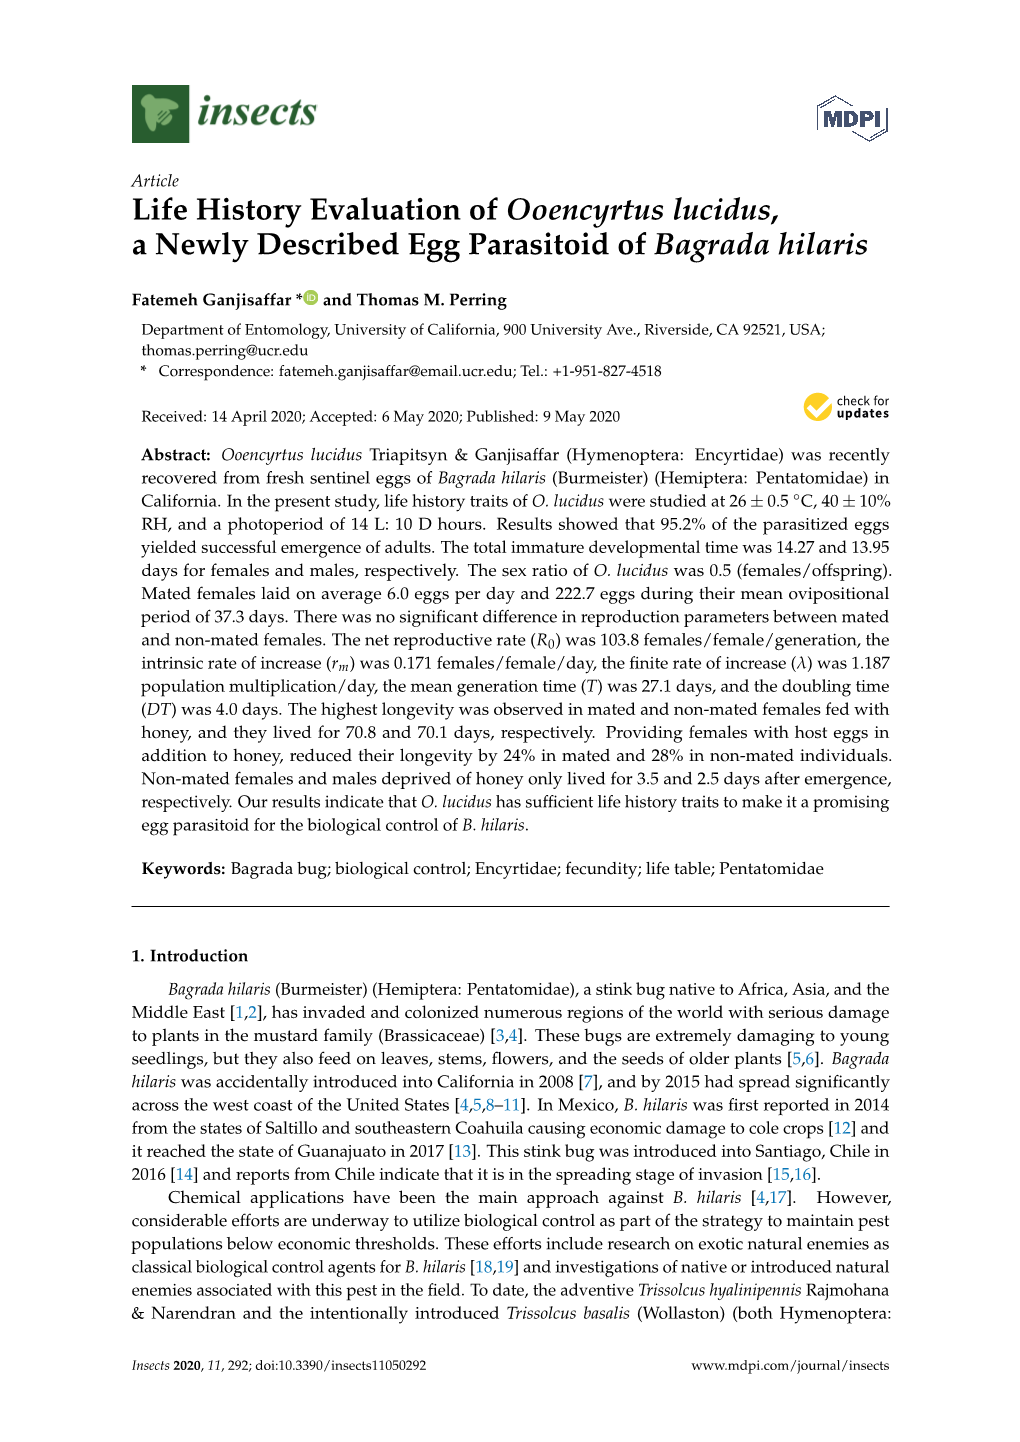 Life History Evaluation of Ooencyrtus Lucidus, a Newly Described Egg Parasitoid of Bagrada Hilaris